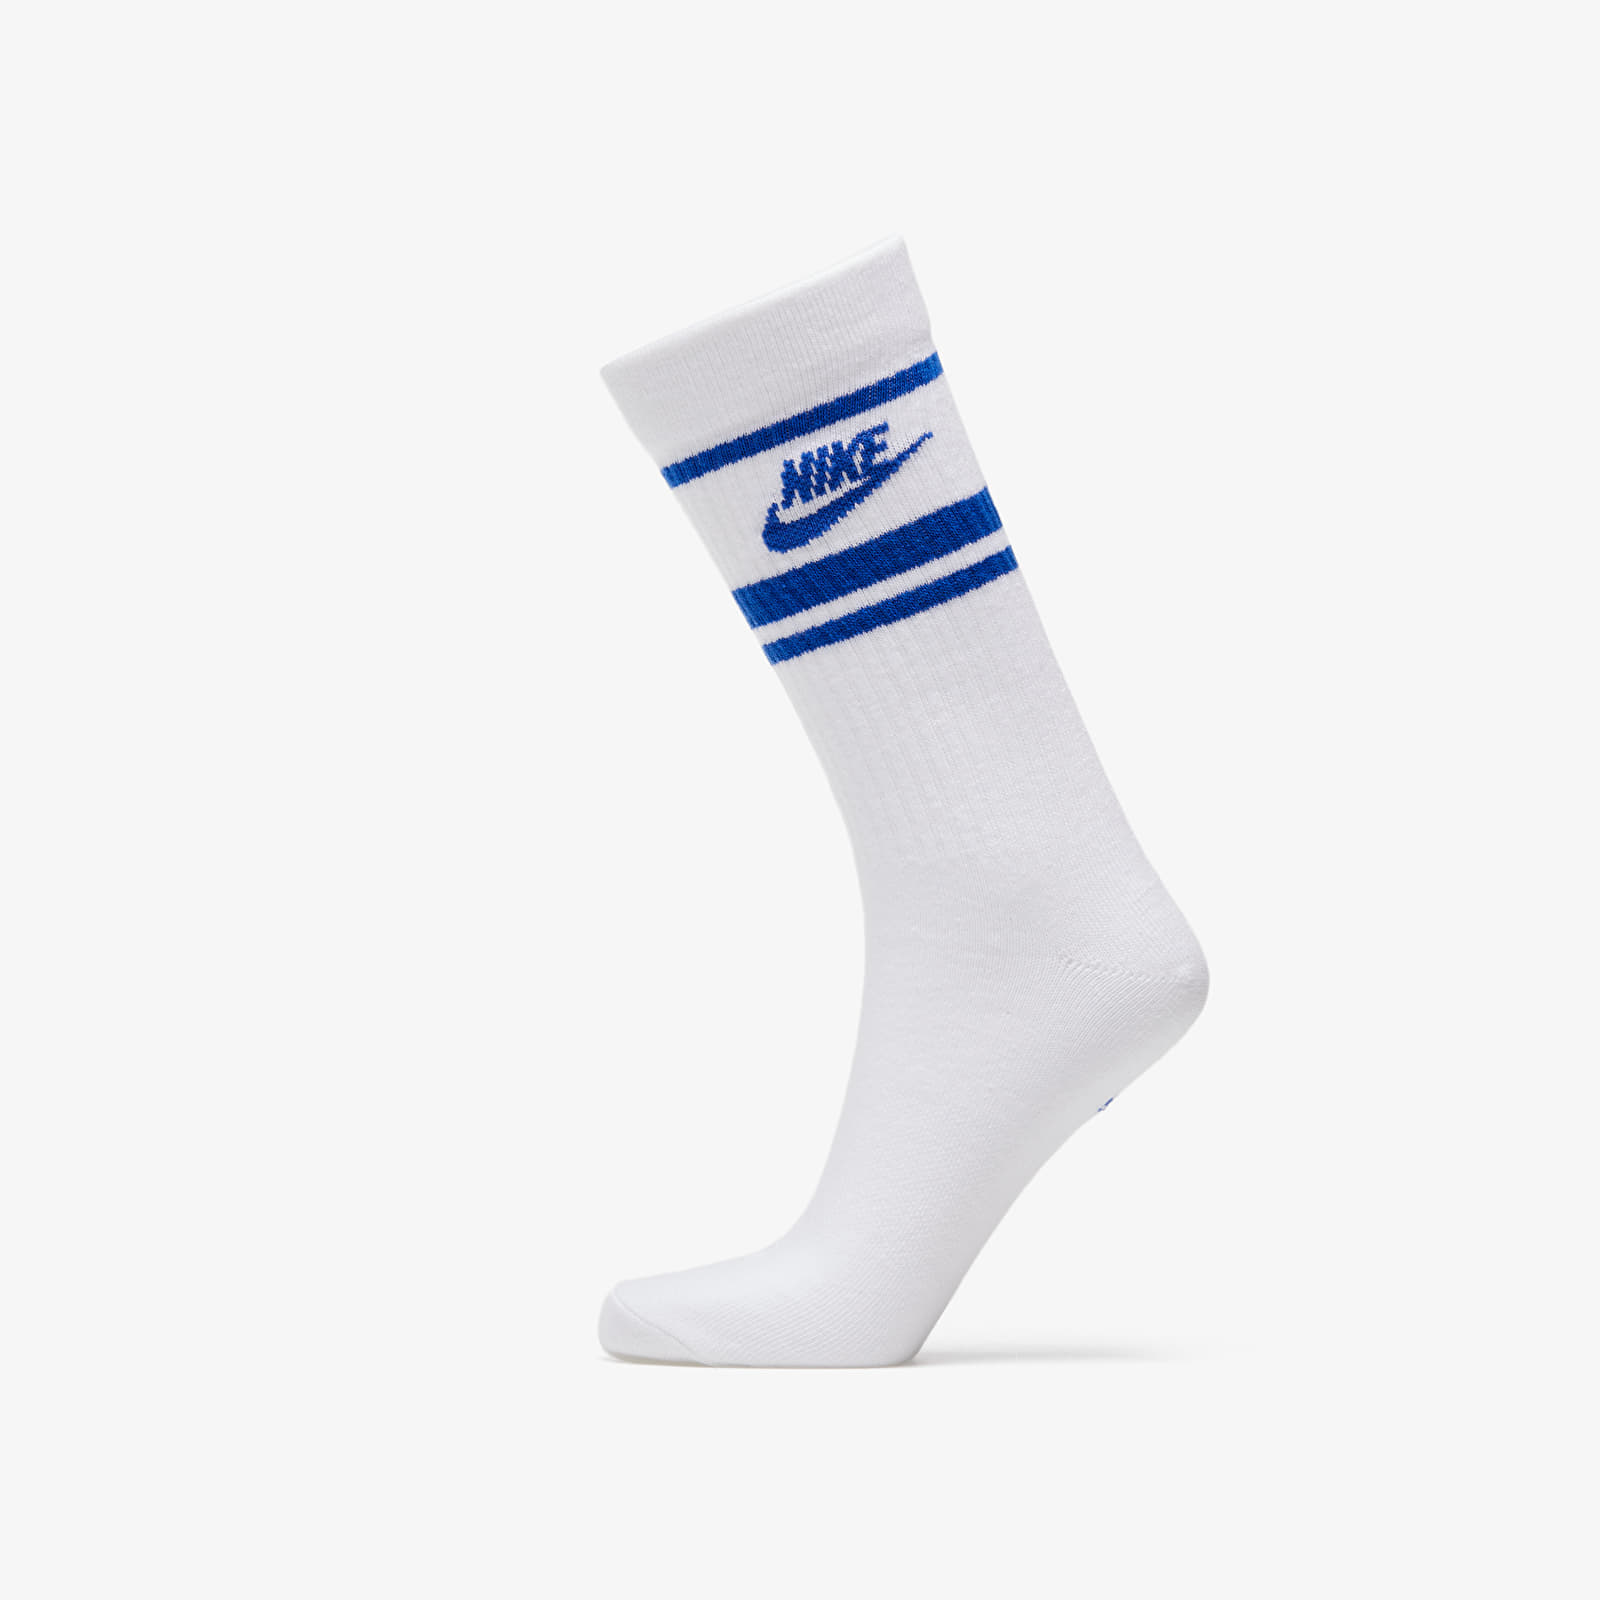 Zoknik Nike Sportswear Essential Crew Socks (3 Pairs) White/ Game Royal/ Game Royal